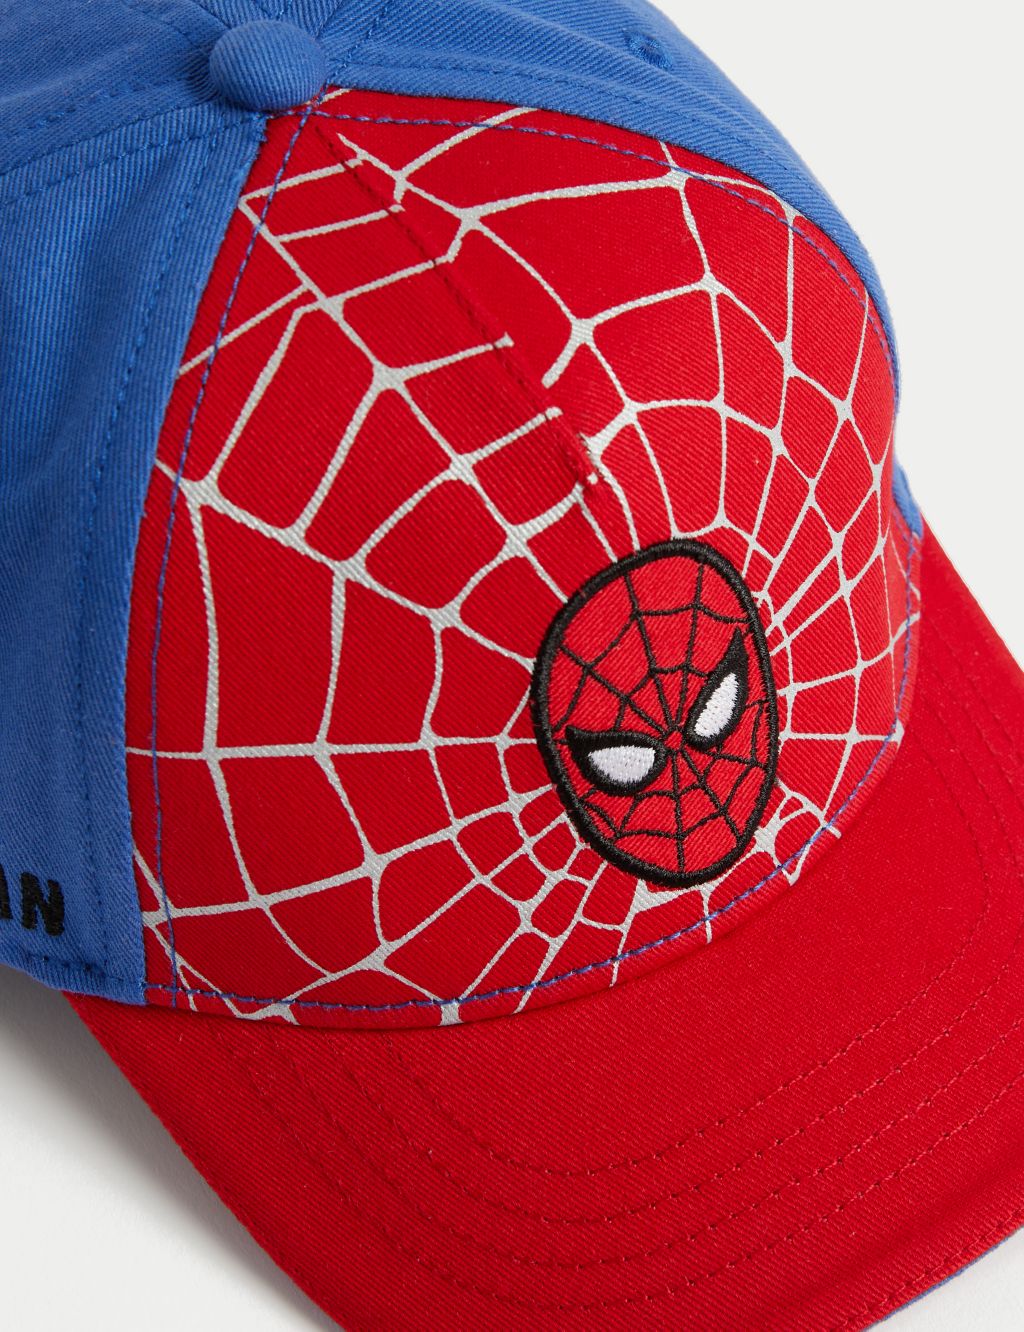 Kids' Pure Cotton Spider-Man™ Baseball Cap (12 Months - 6 Years) image 3